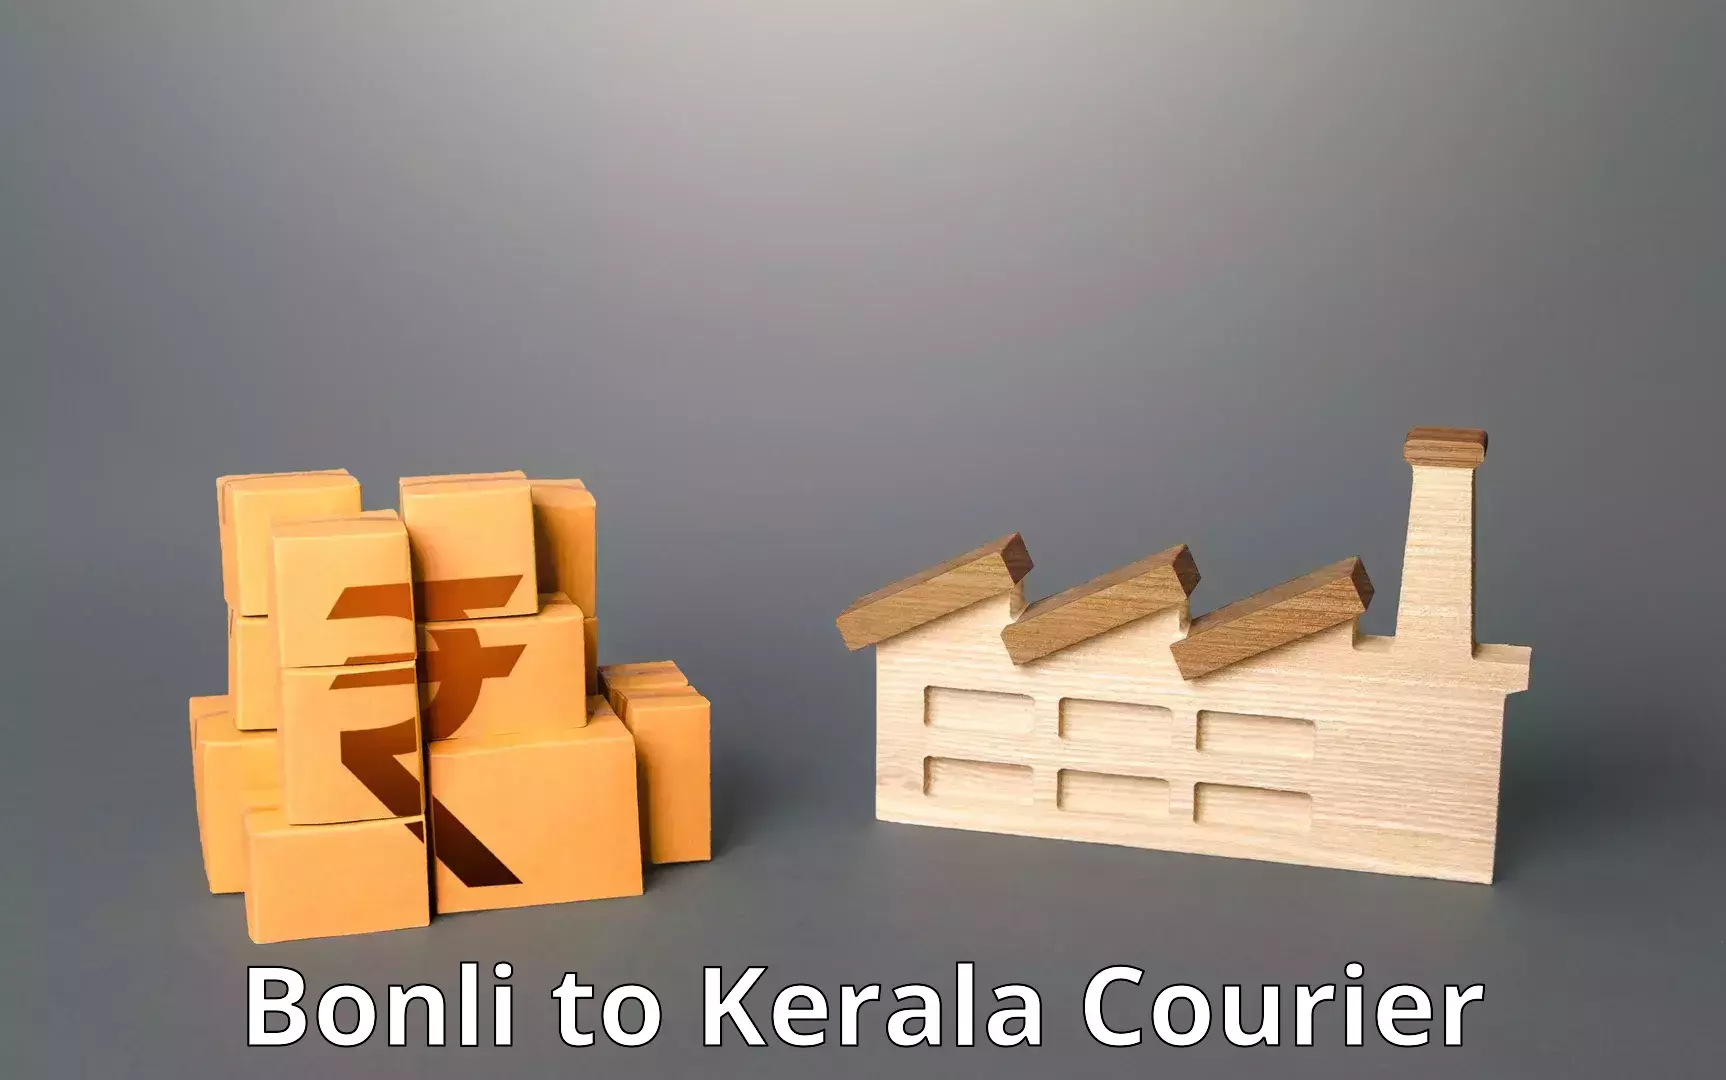 Flexible delivery schedules Bonli to Kerala